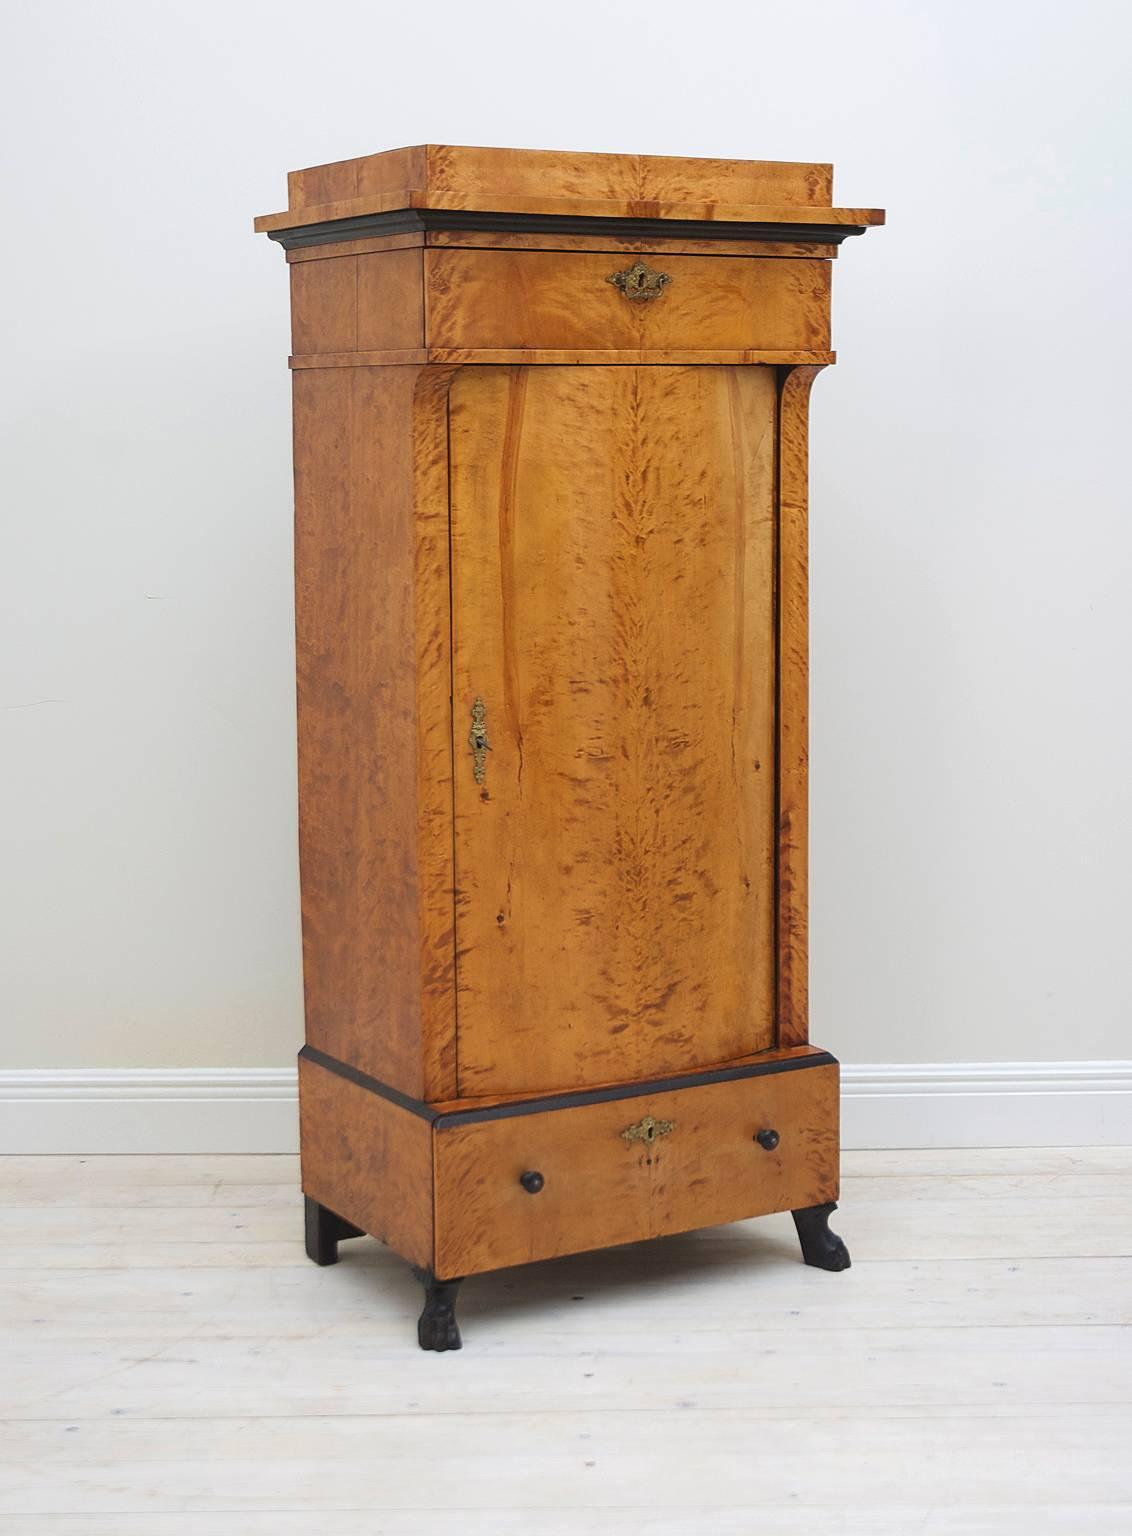 Karl Johan Antique Swedish Empire Pedestal Cabinet in Polished Birch, circa 1810